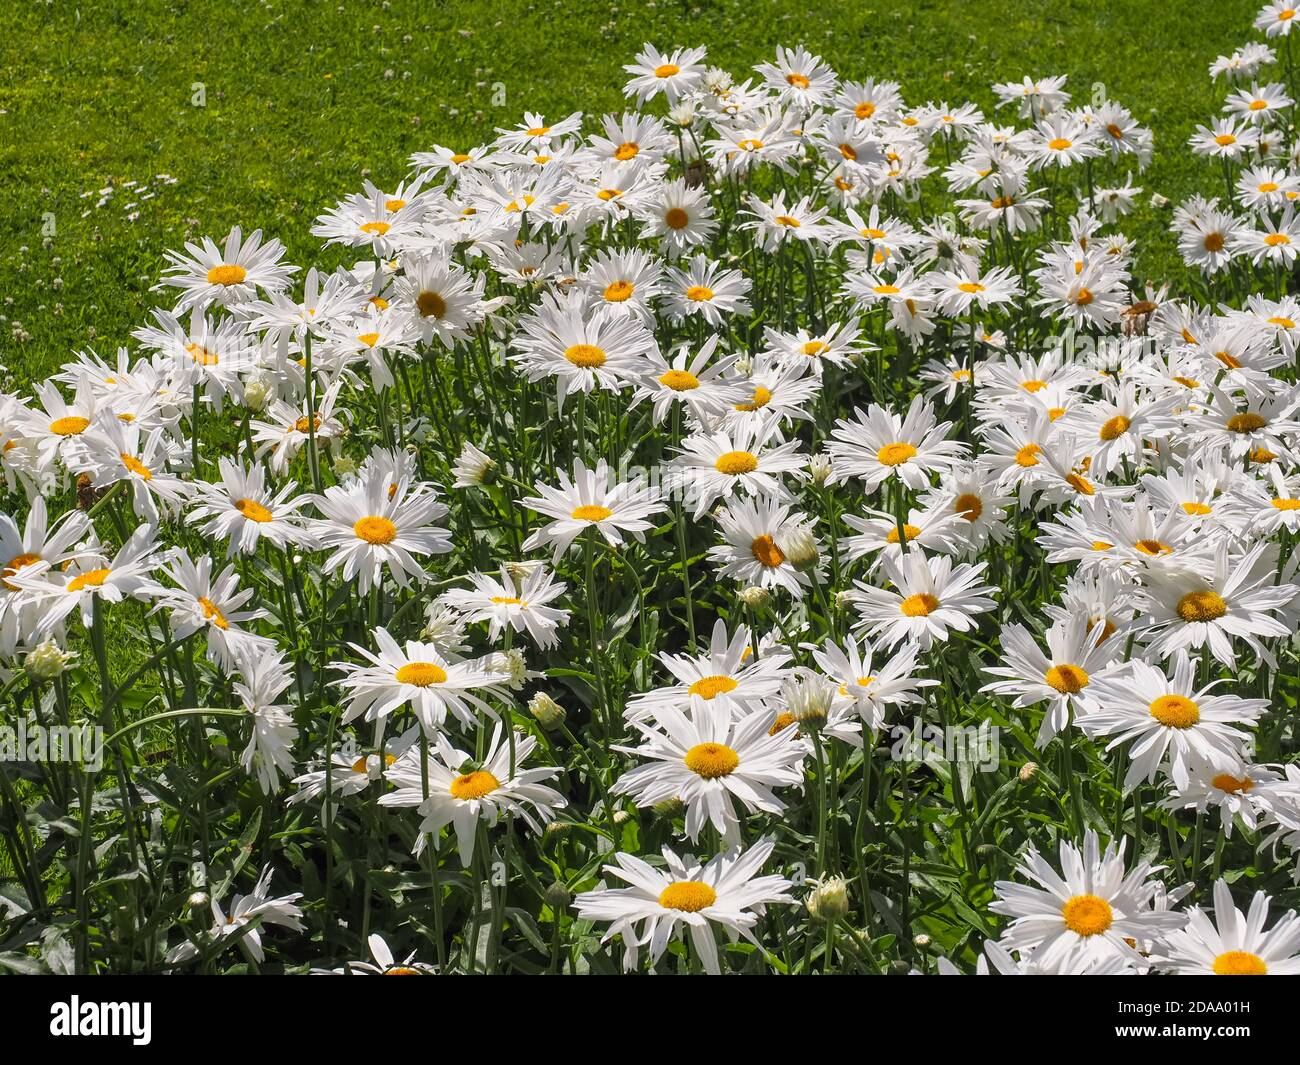 Leucanthemum Maximum, white daisy-like flowers. Max Chrysanthemum is popular garden hybrid, perennial, flowering plant in the aster family Asteraceae. Stock Photo